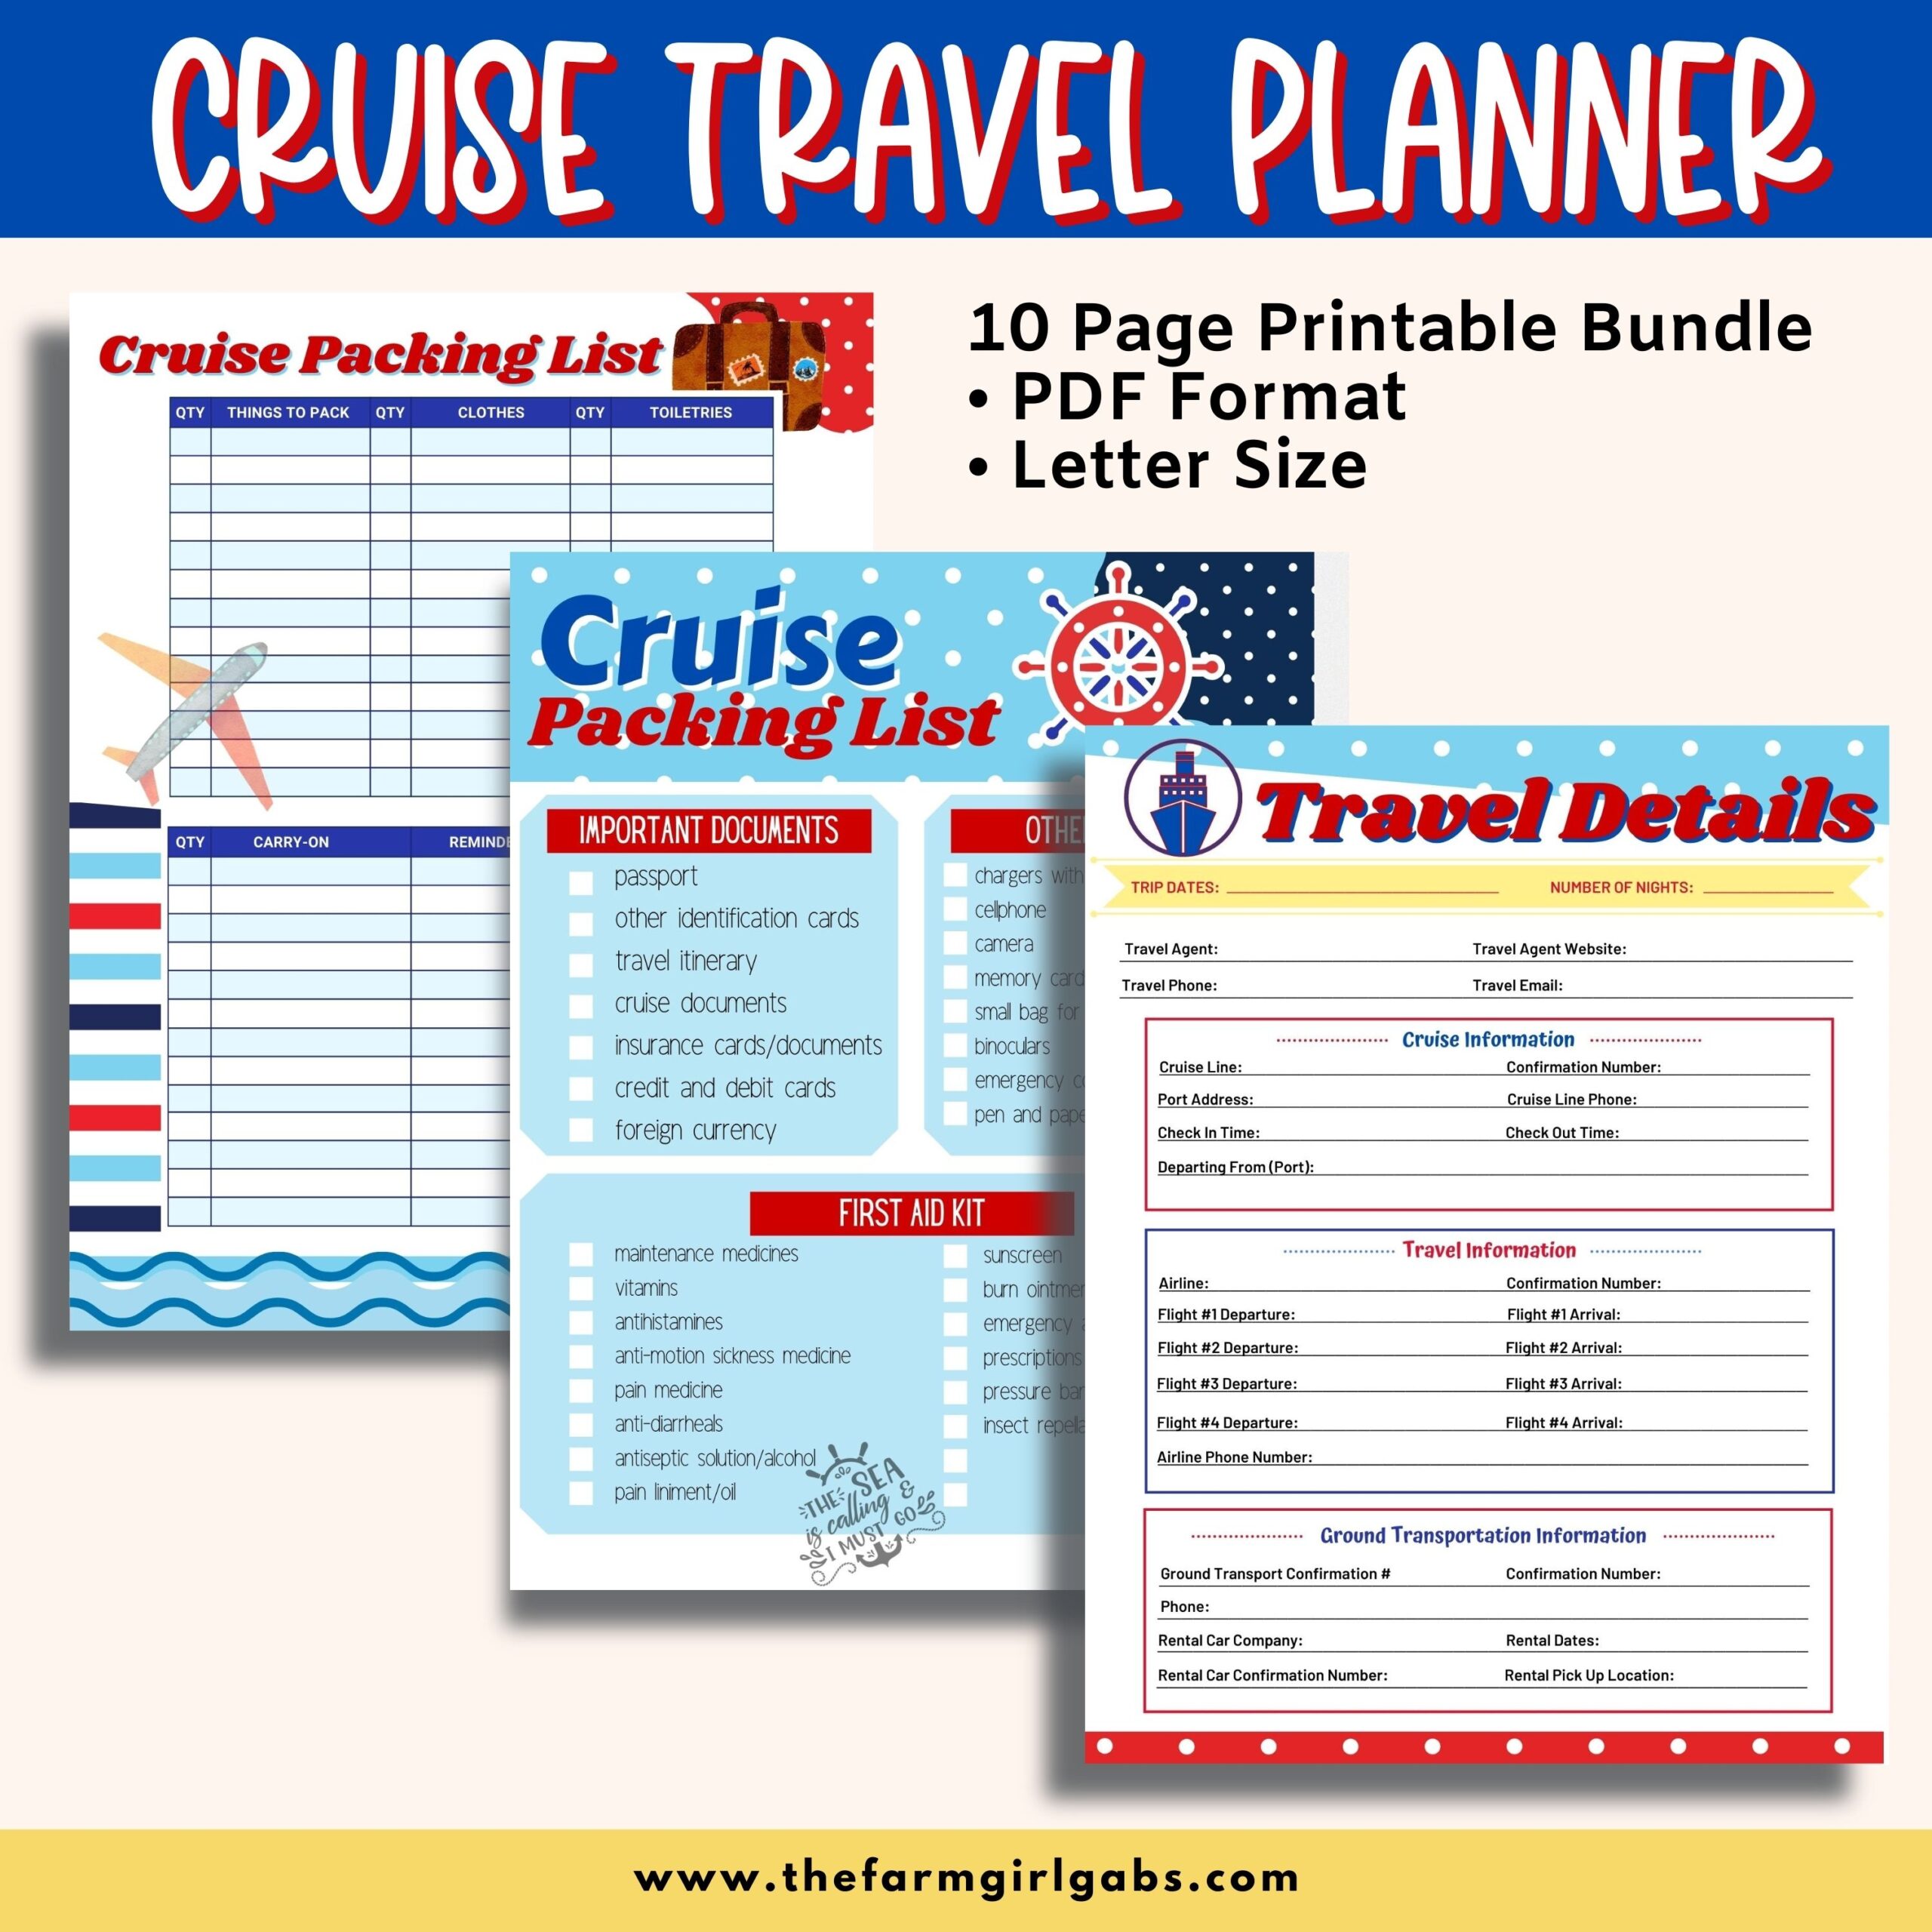 Printable Cruise Planner Farm Girl Designs